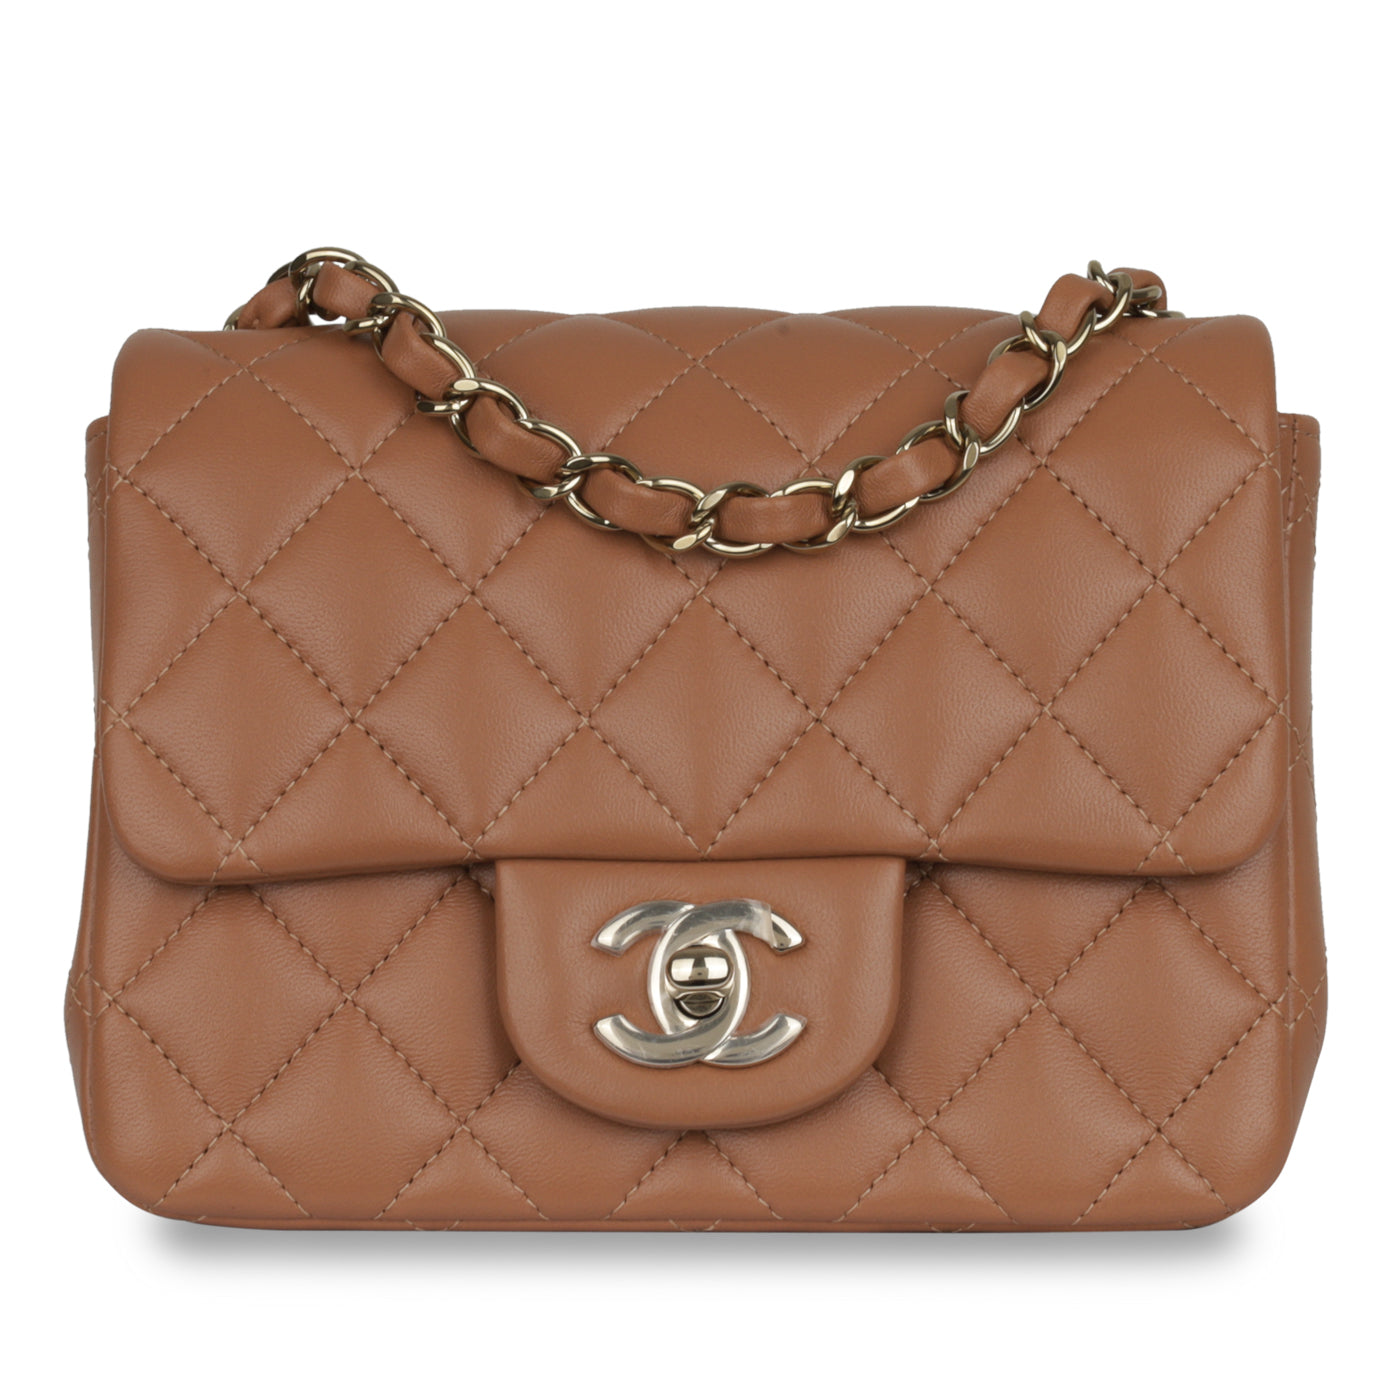 Chanel - Mini Square Classic Flap Bag - Caramel Lambskin - CGHW - Brand New